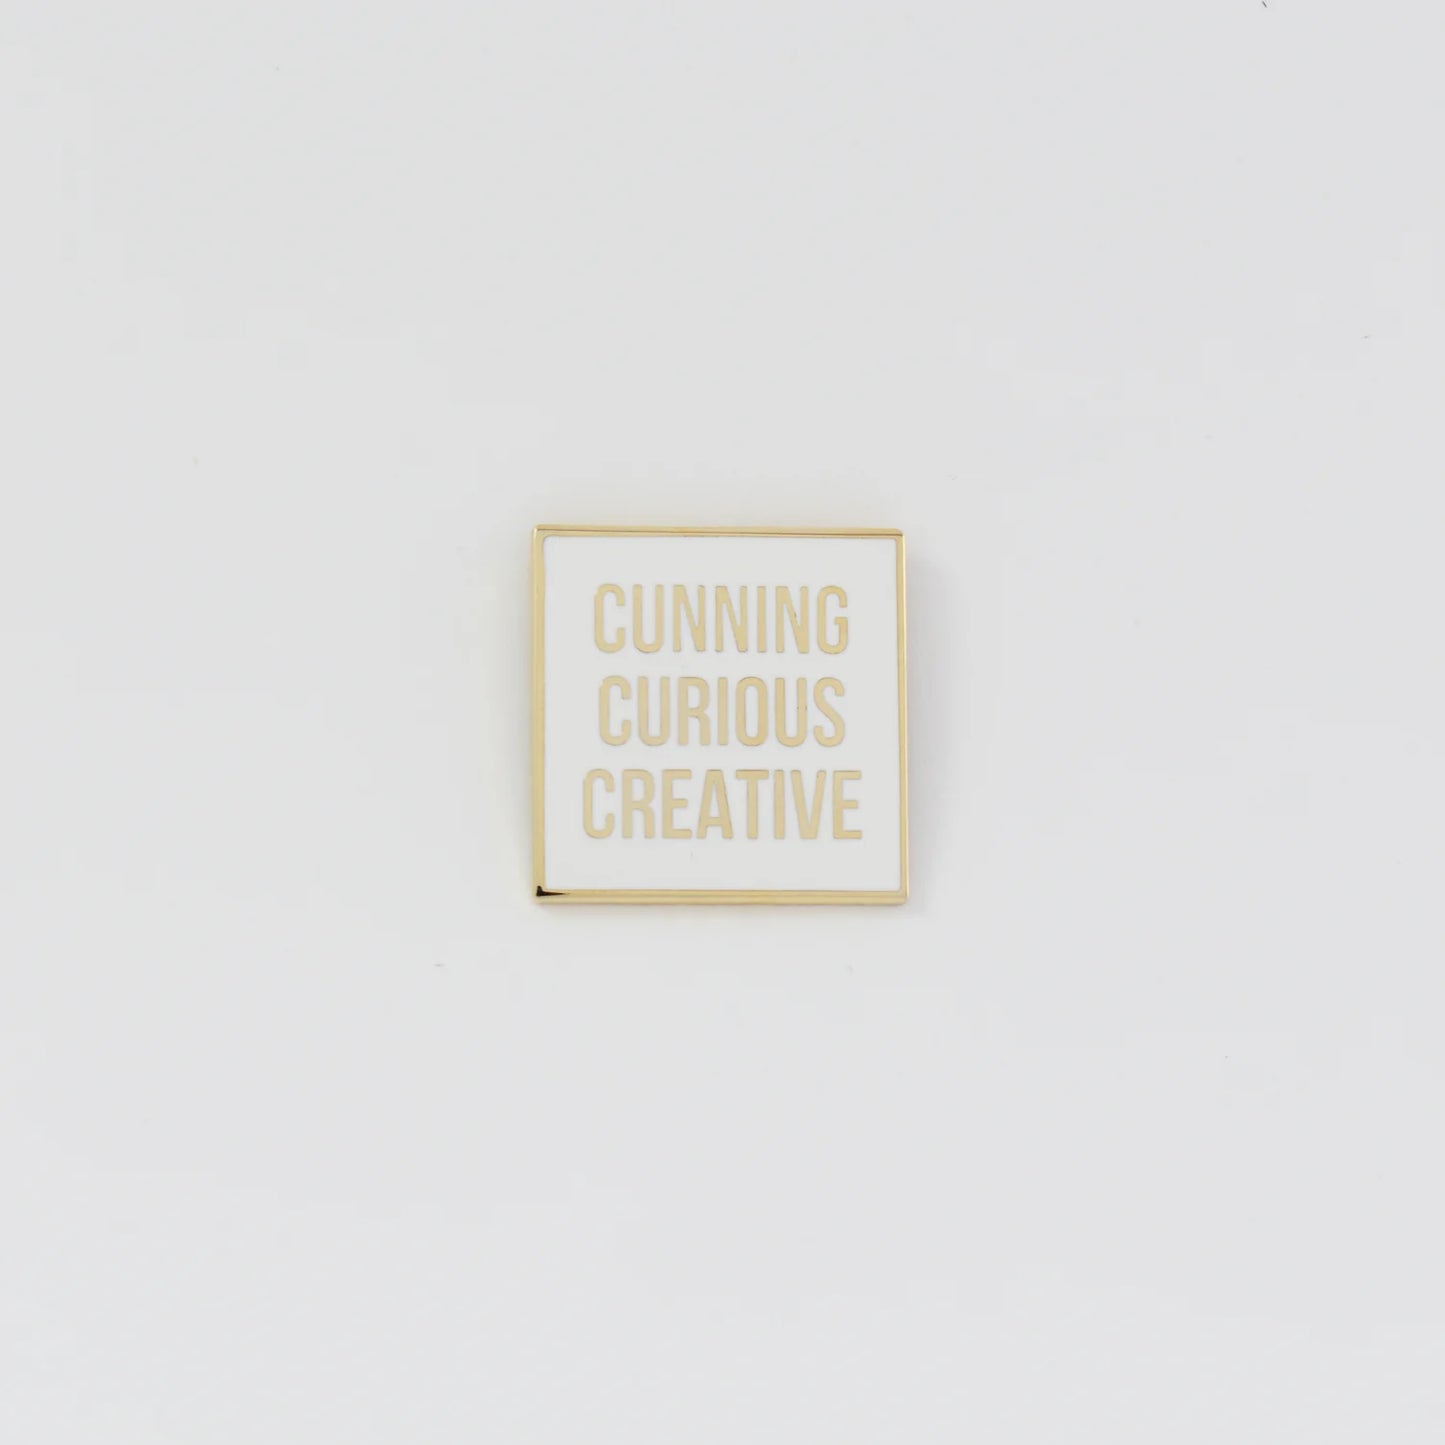 Cunning Curious Creative Enamel Pin